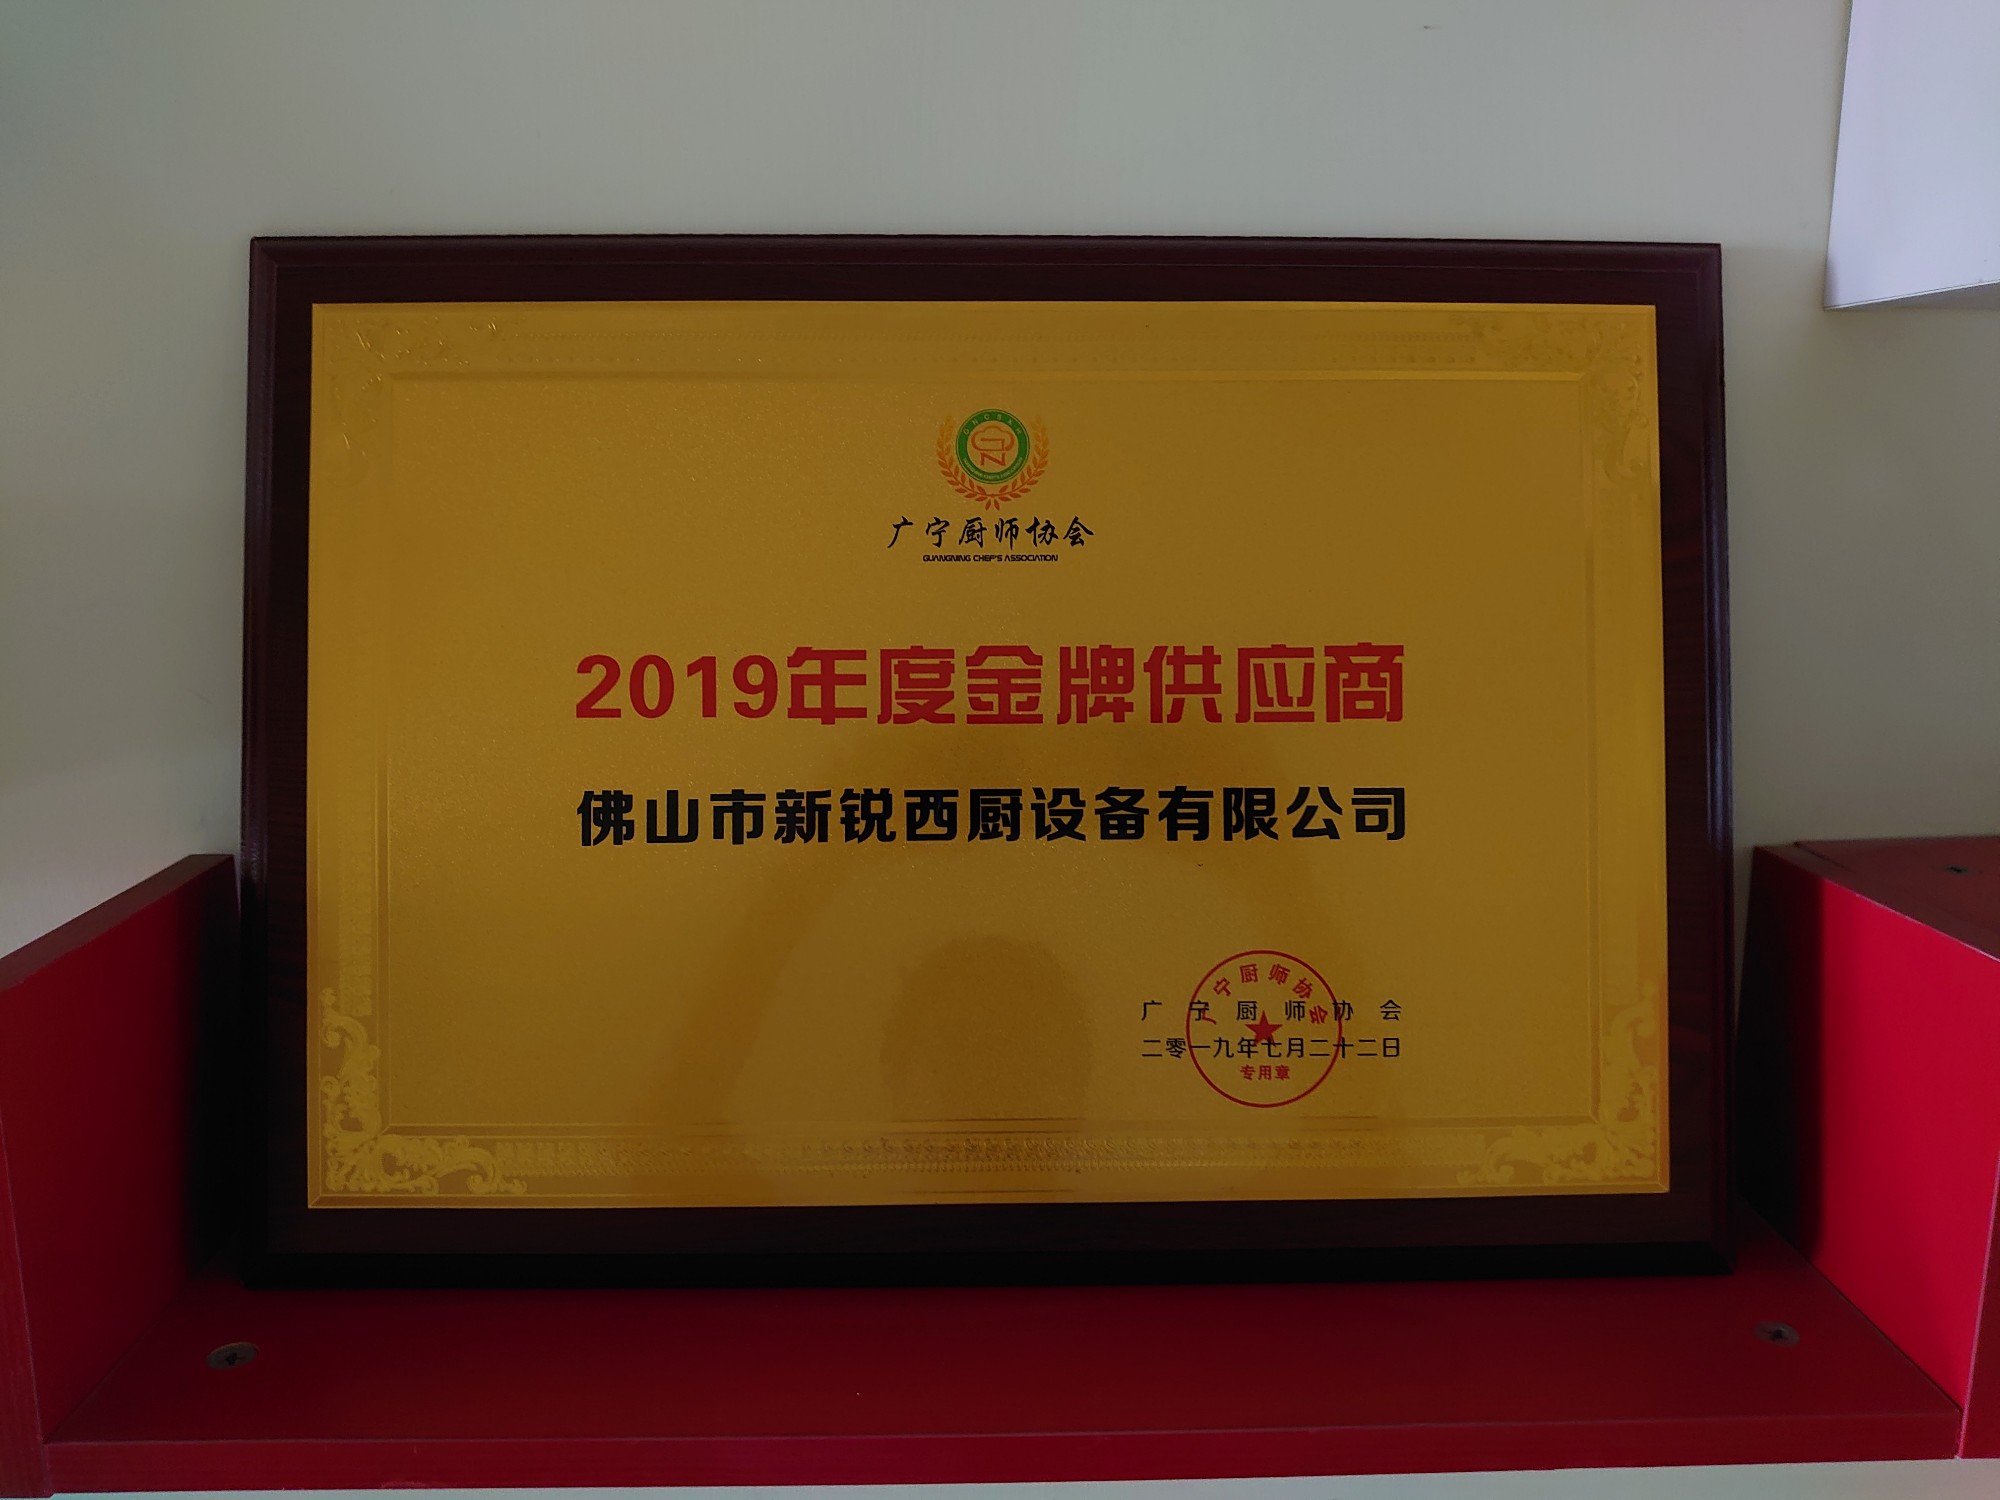 Golden Supplier of Guangning Chef Association